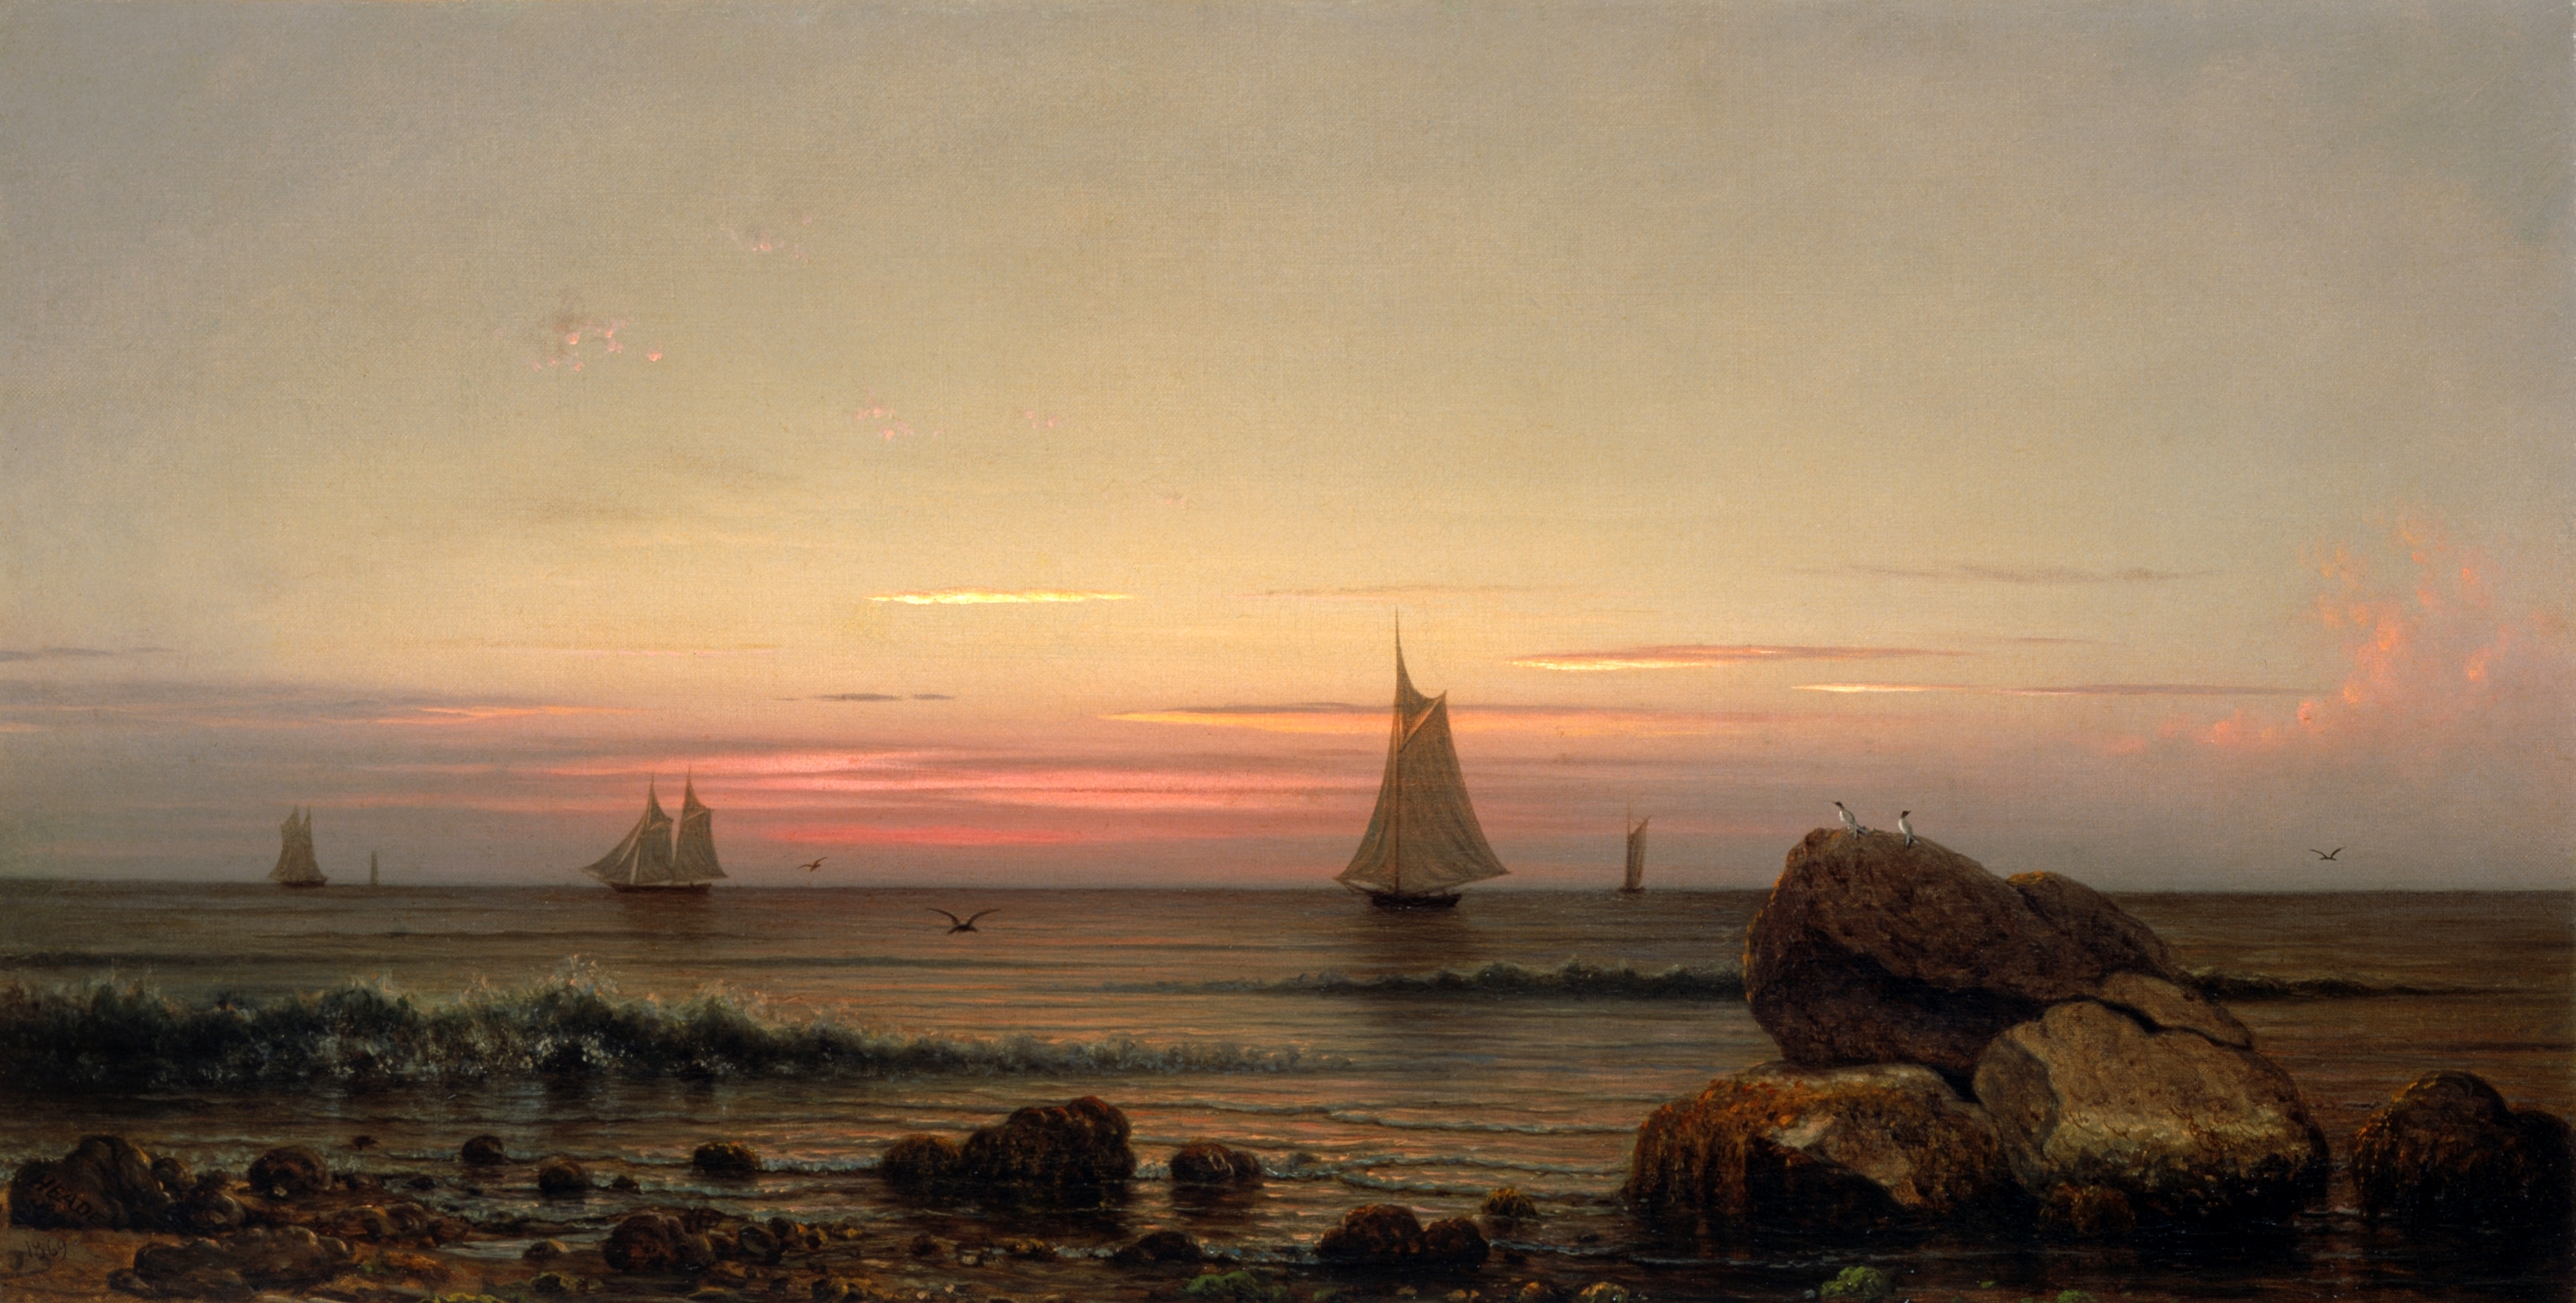 Sailing off the Coast by Martin Johnson Heade, 1869